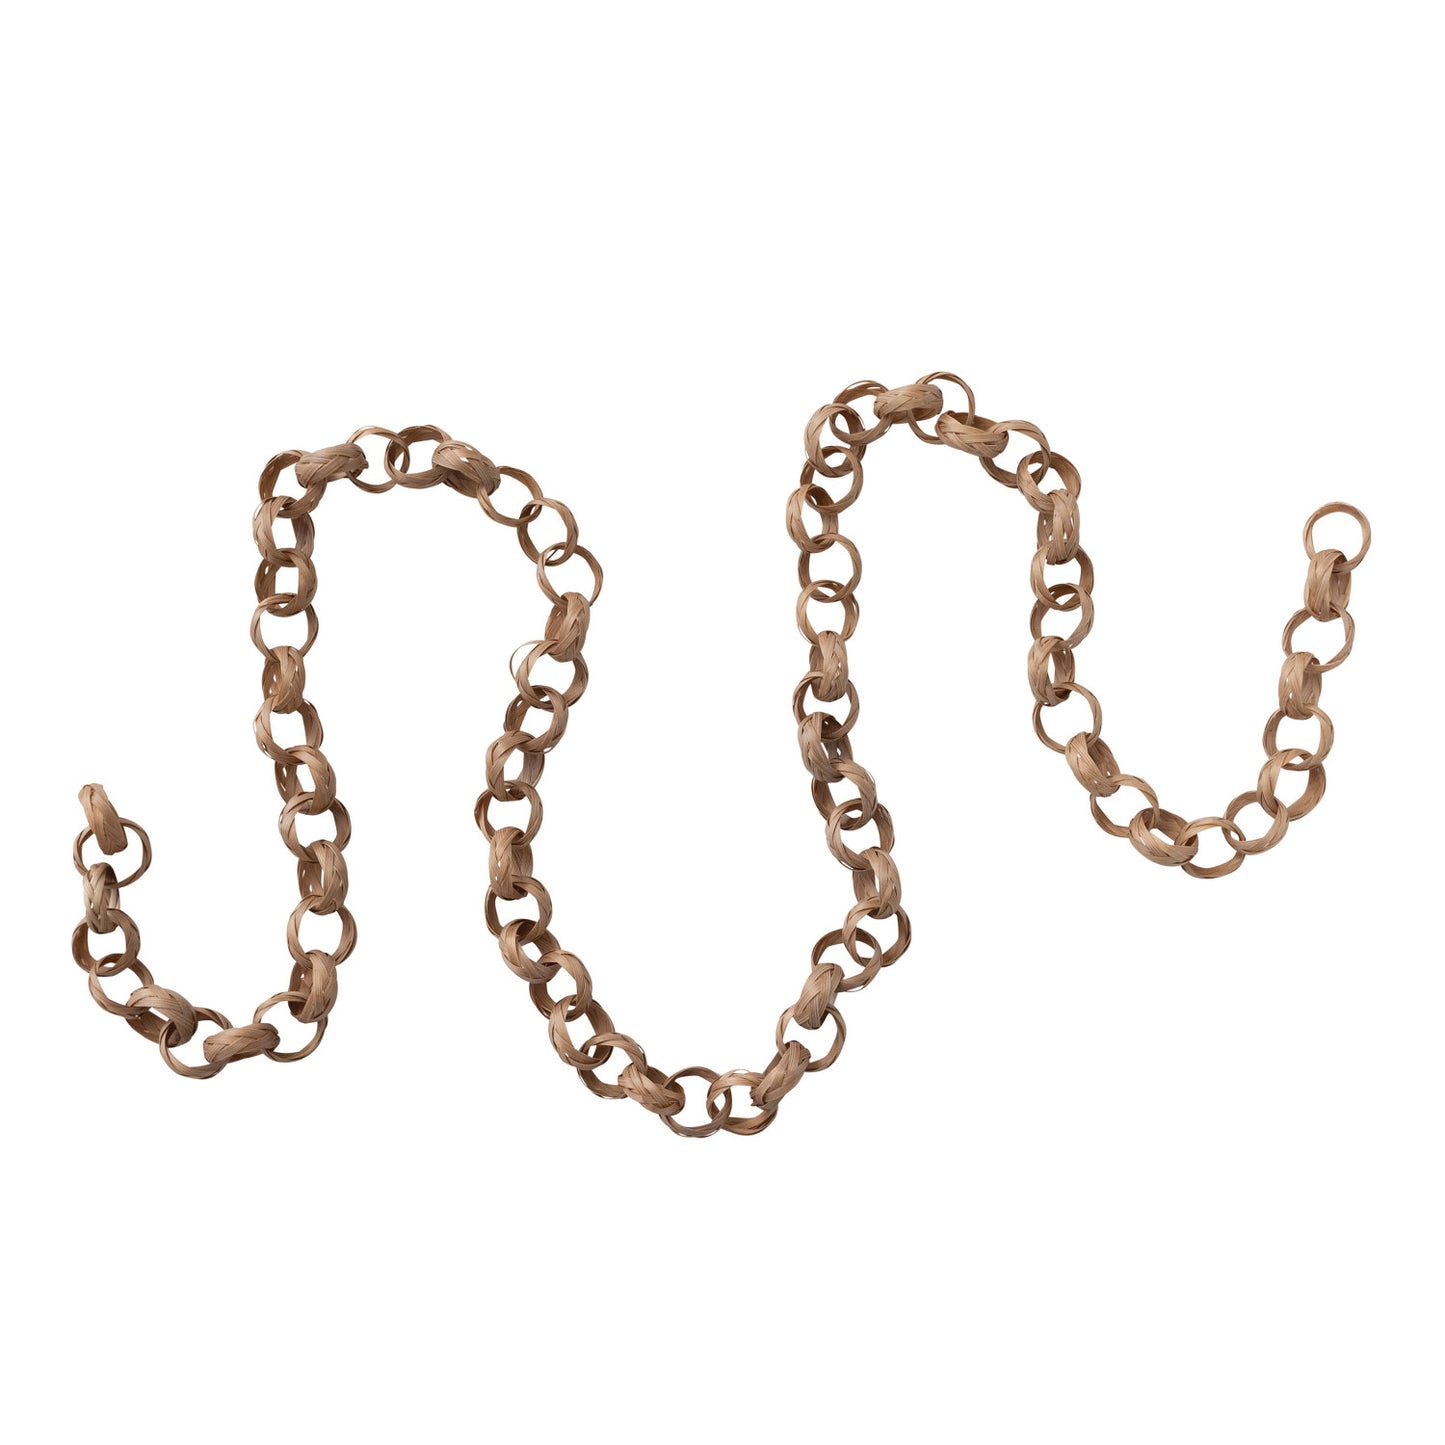 Handmade Chain Link Garland